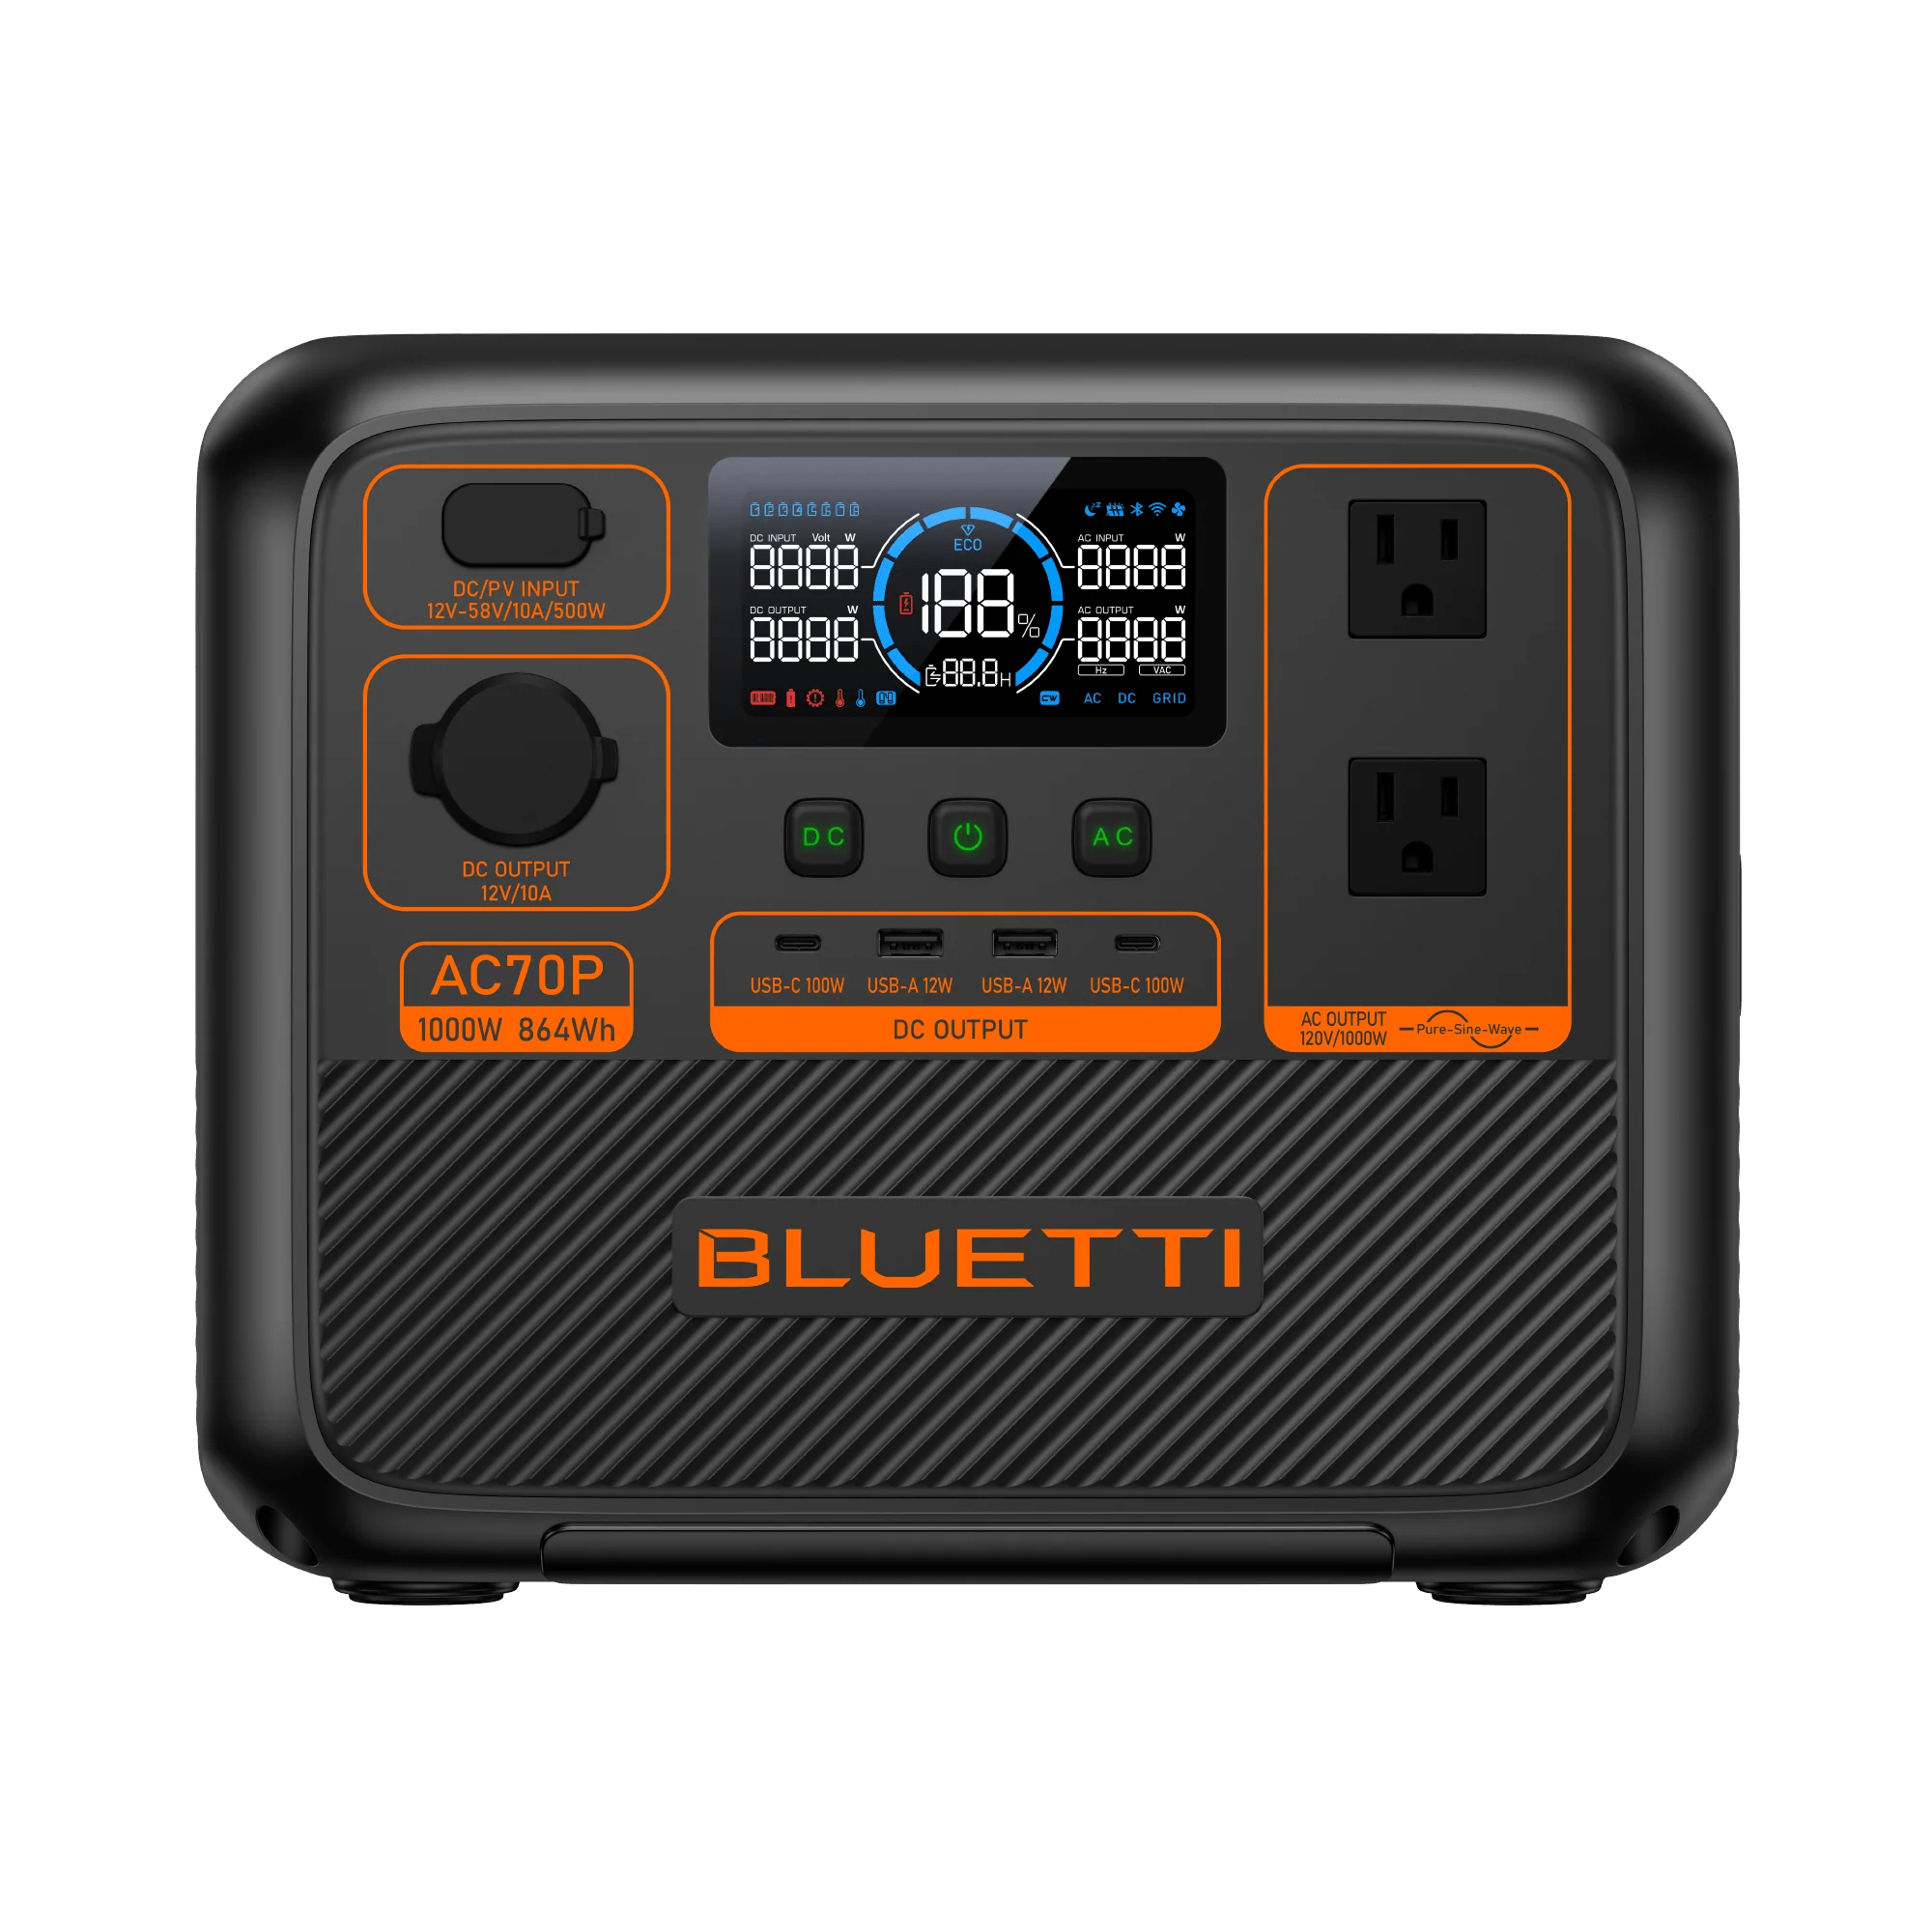 Bluetti Power Station Bluetti AC70P Portable Power Station | 1000W 864Wh